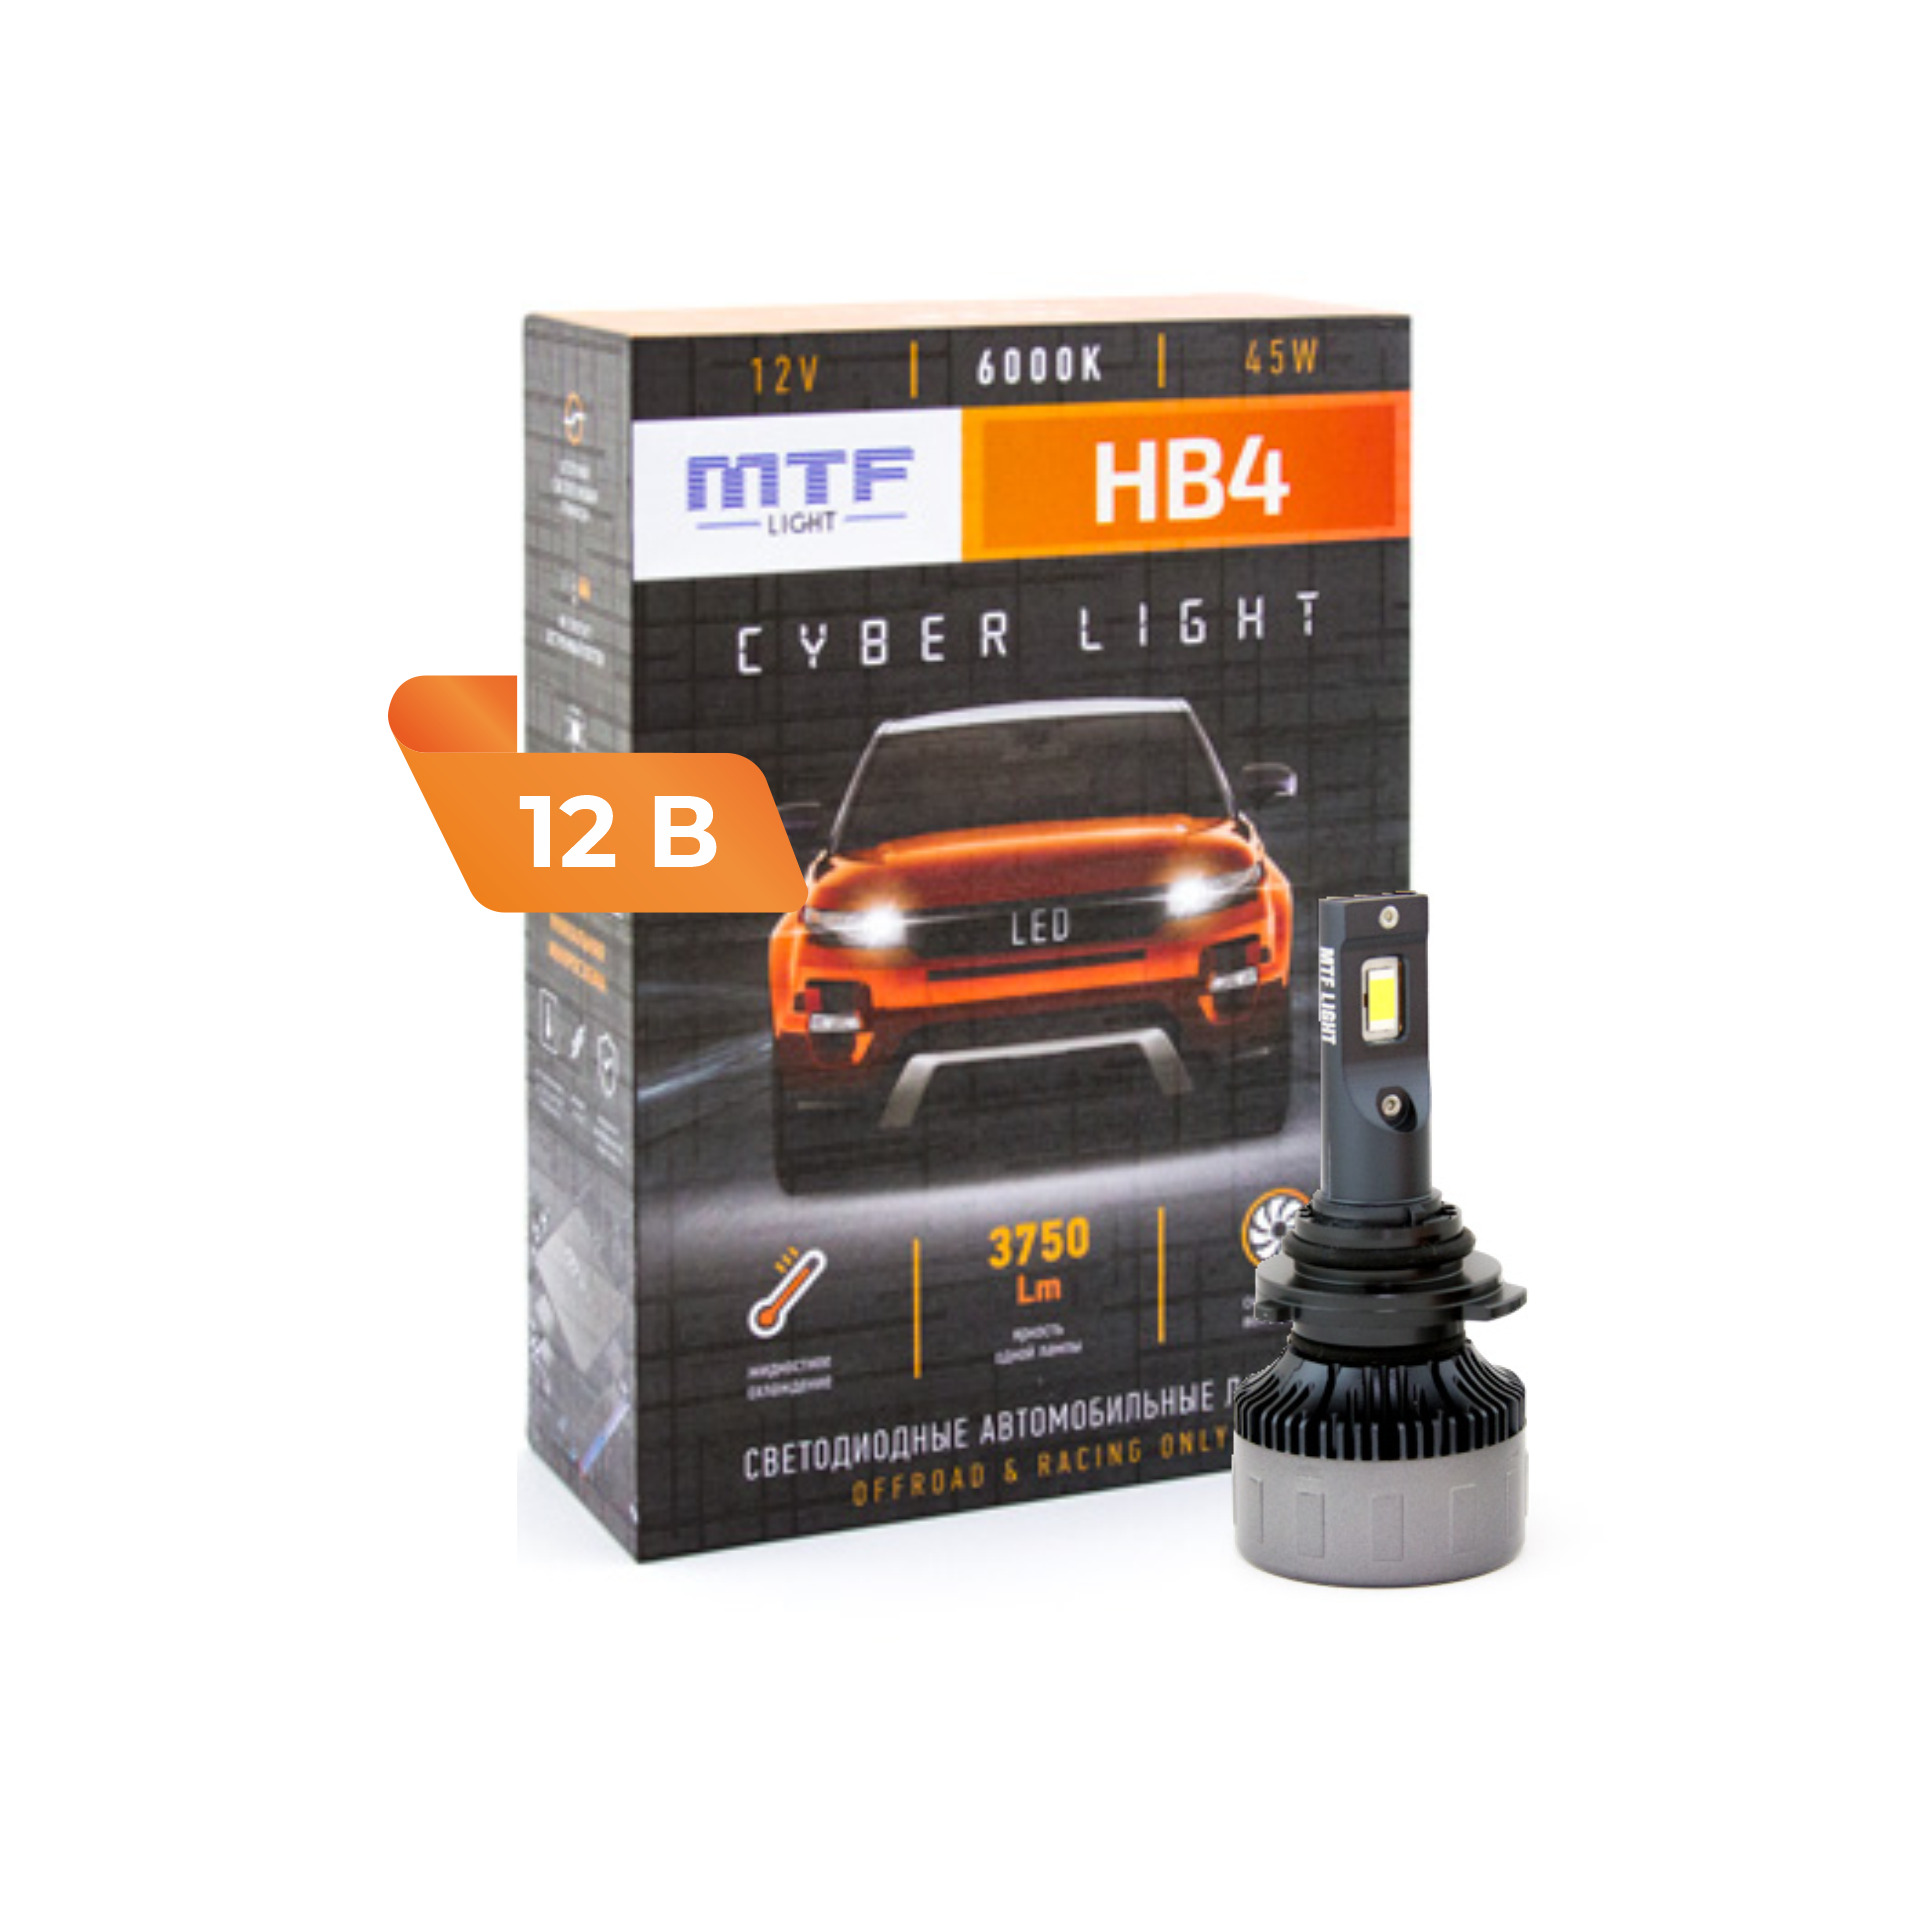 Mtf cyber light pro h7. Лампа светодиодная MTF Light Cyber Light h11. Светодиодные лампы h7 MTF-Light Cyber Light 6000к. Светодиодные лампы h7 MTF-Light Cyber Light 24v.